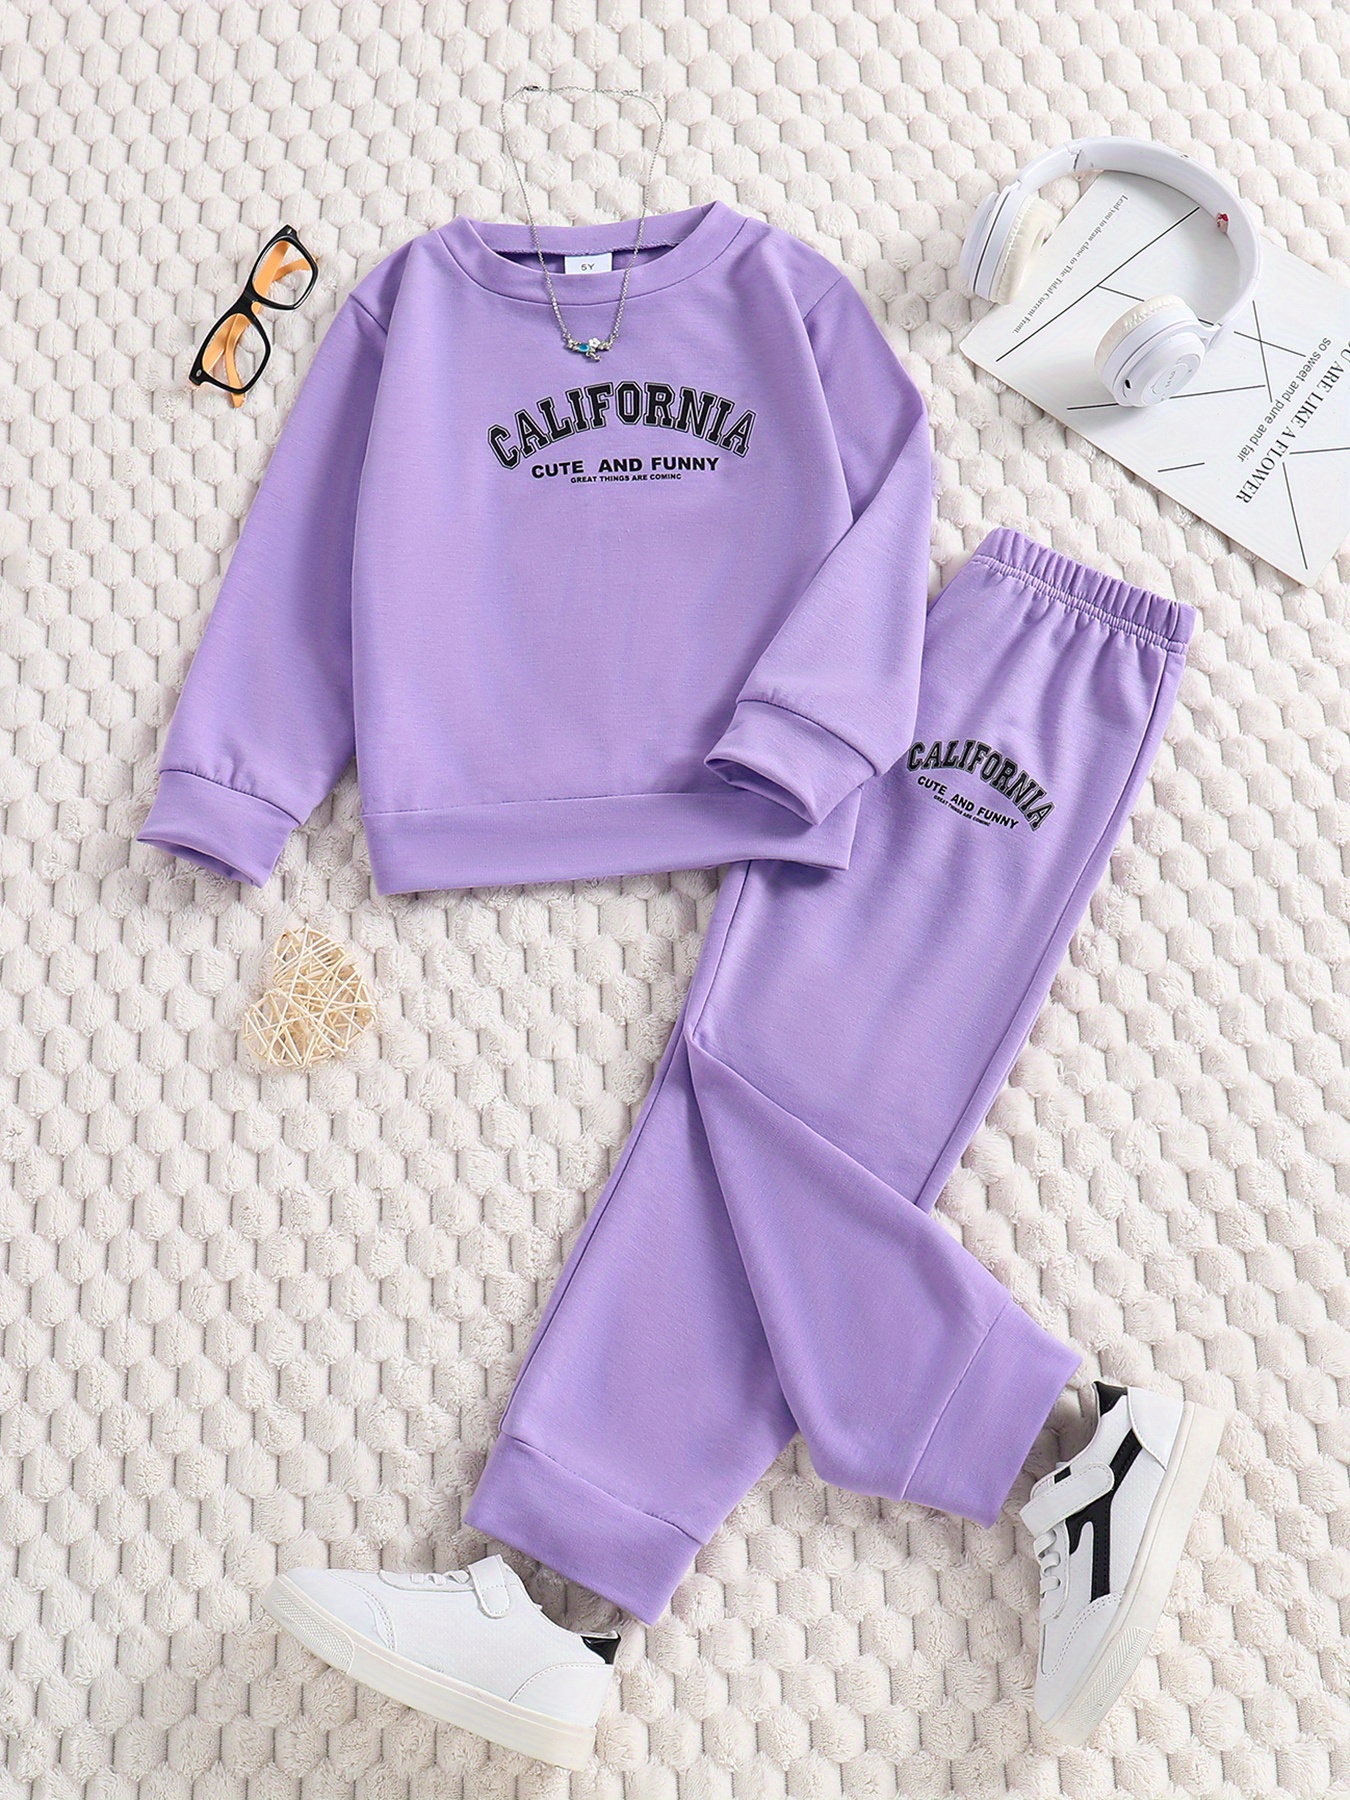 Girl's California Print Outfit, Hoodie & Trendy Cargo Pants Set